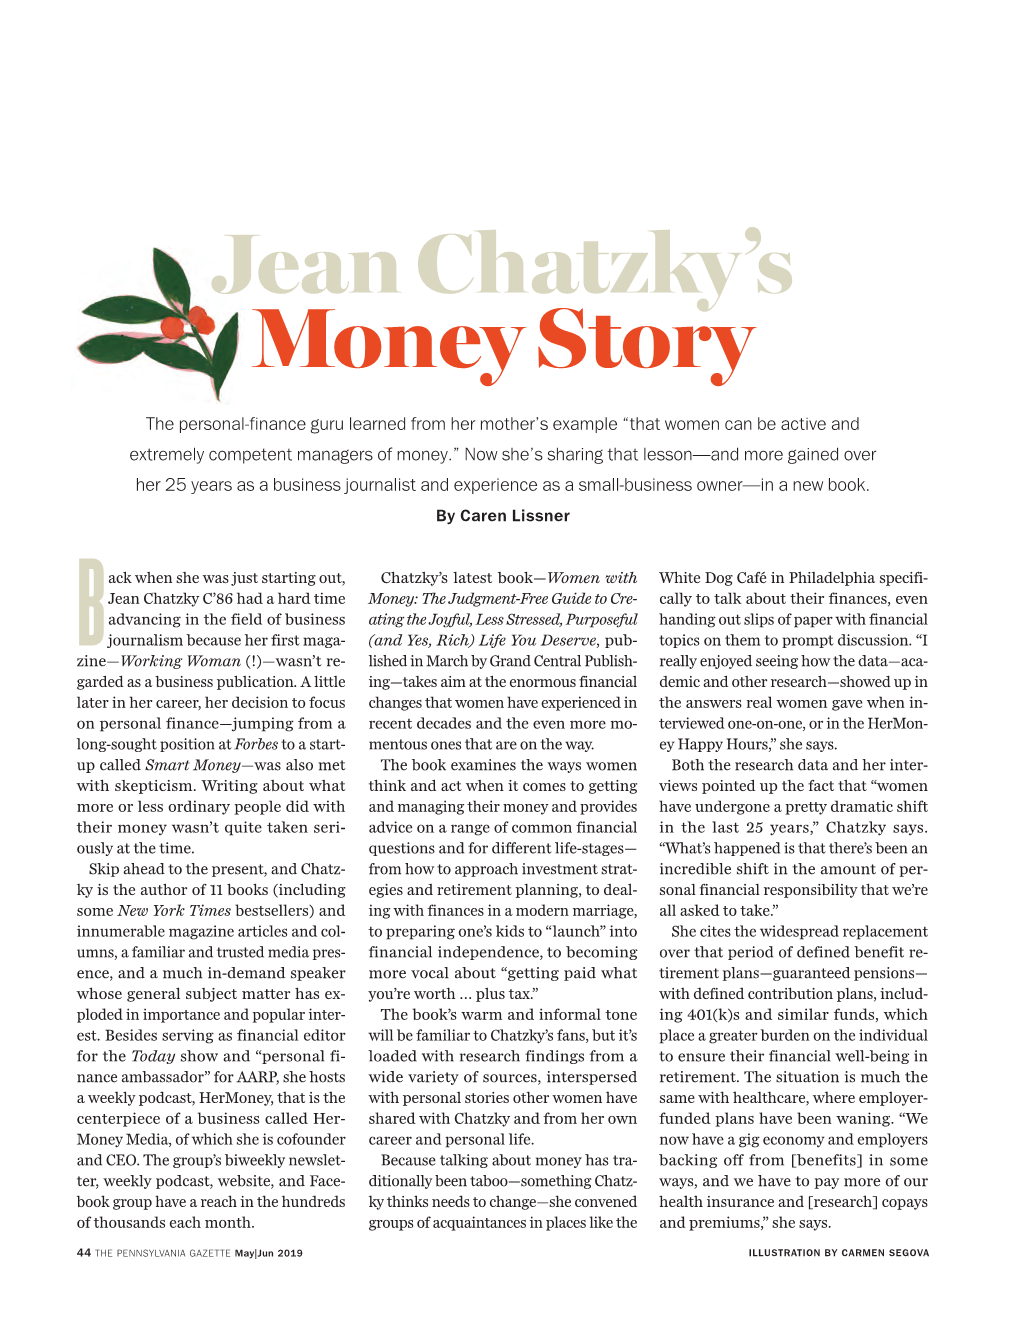 Jean Chatzky's Money Story